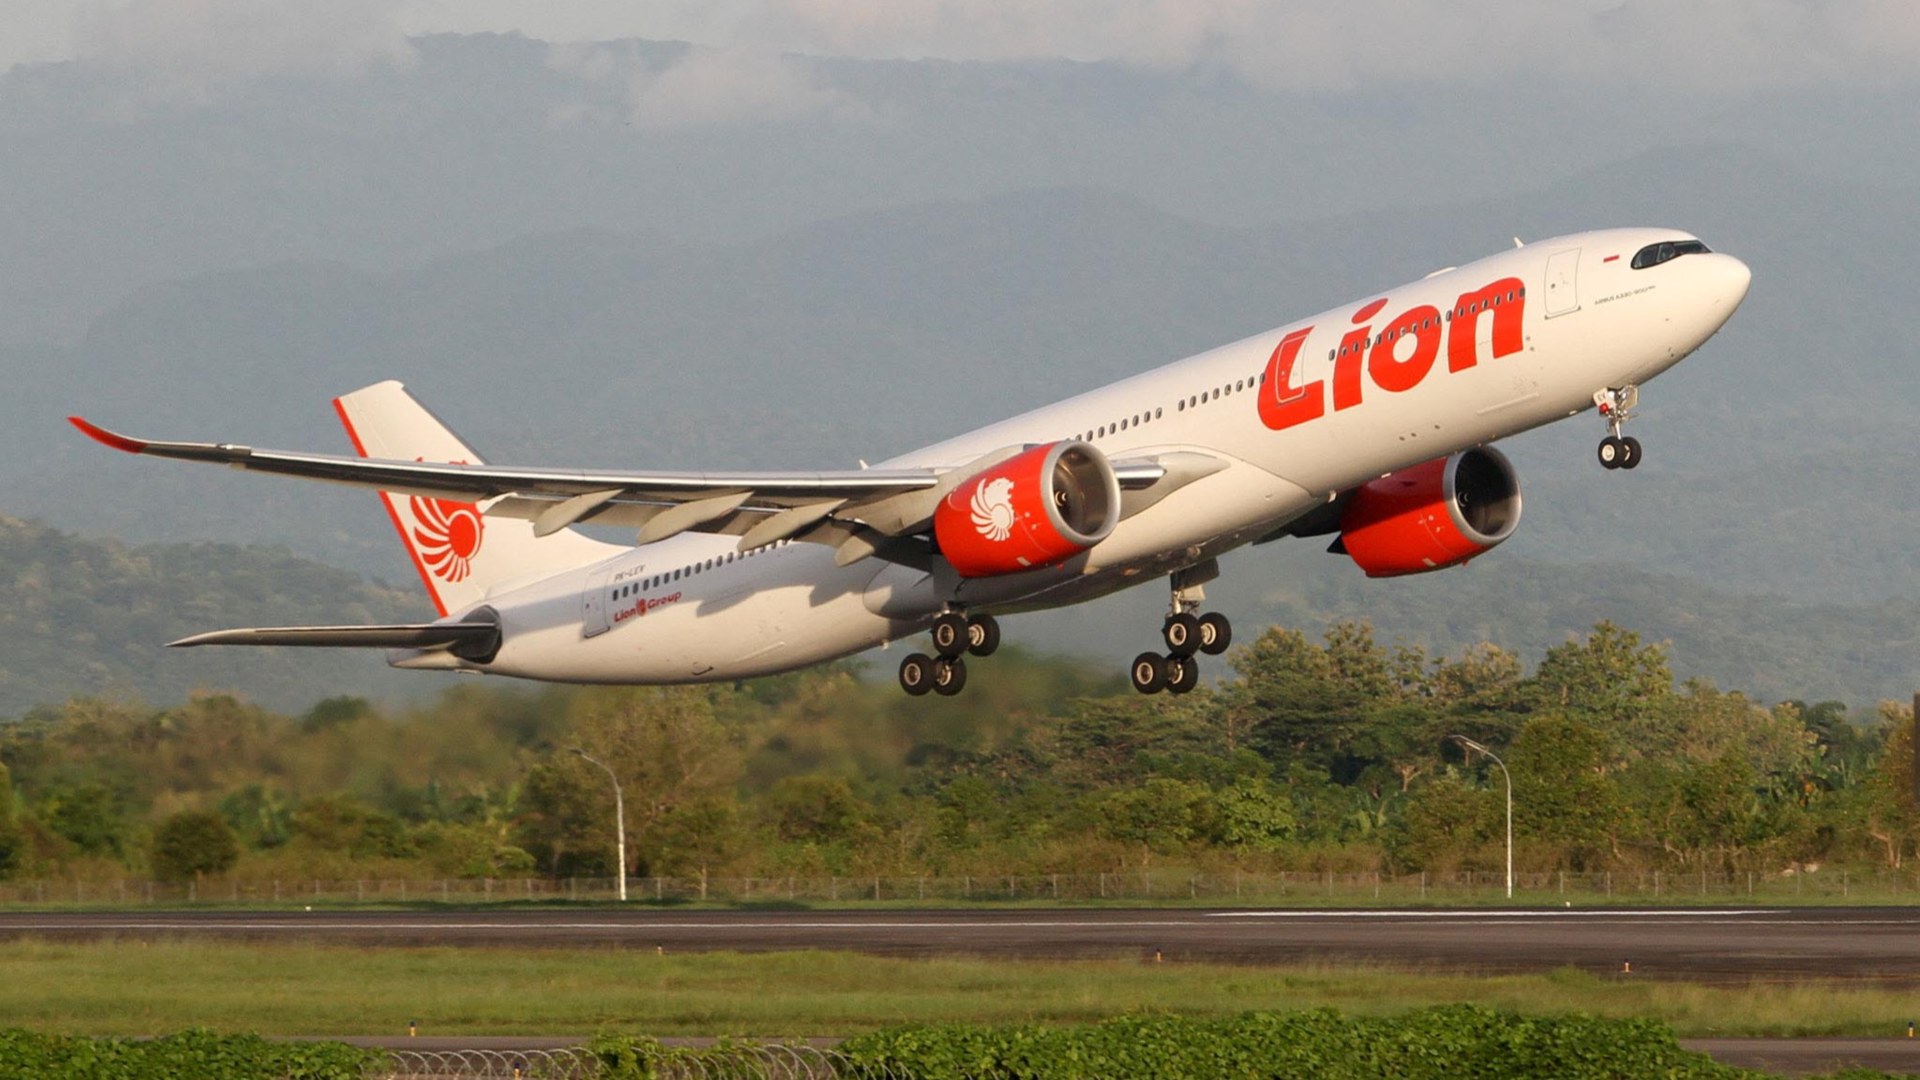  Menimbang Posisi Lion Air Rusdi Kirana Jelang IPO di Bursa Efek Indonesia